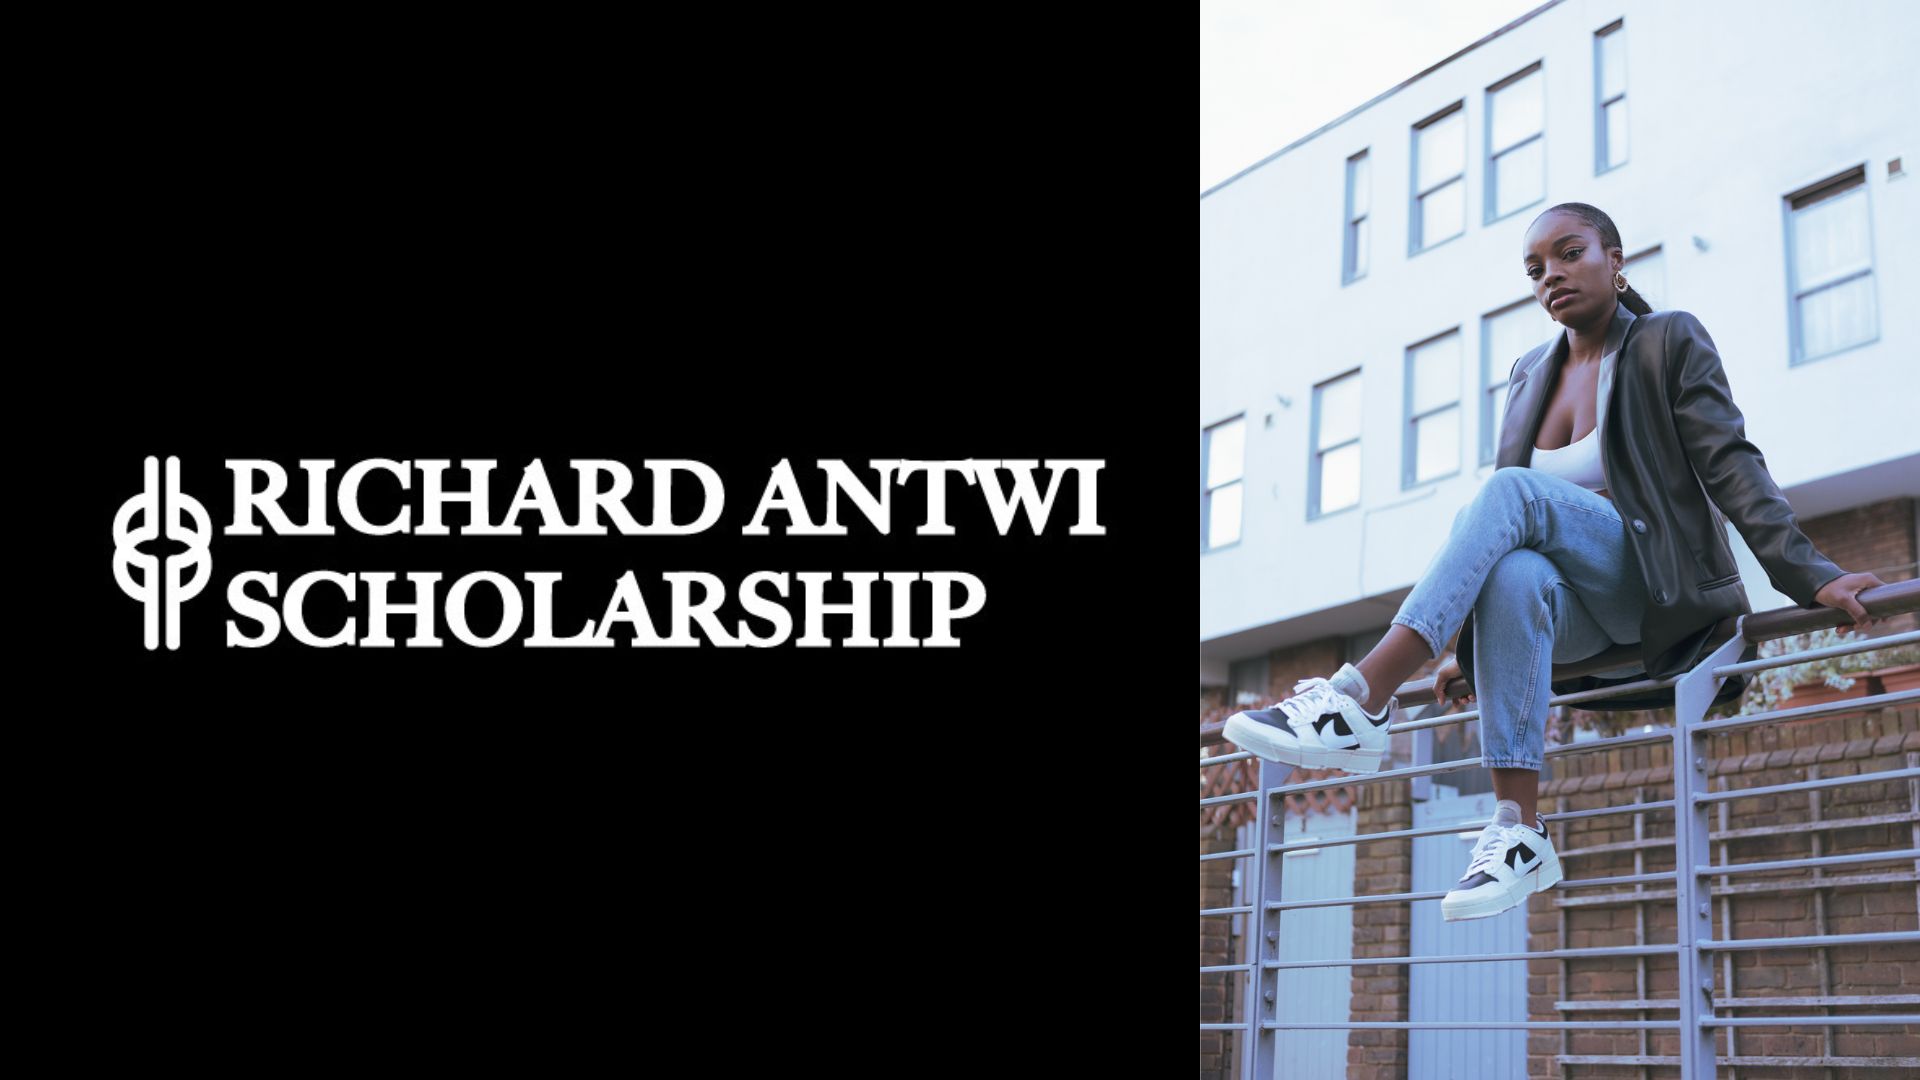 Janelle Mitchell - Richard Antwi Scholarship's fifth scholar